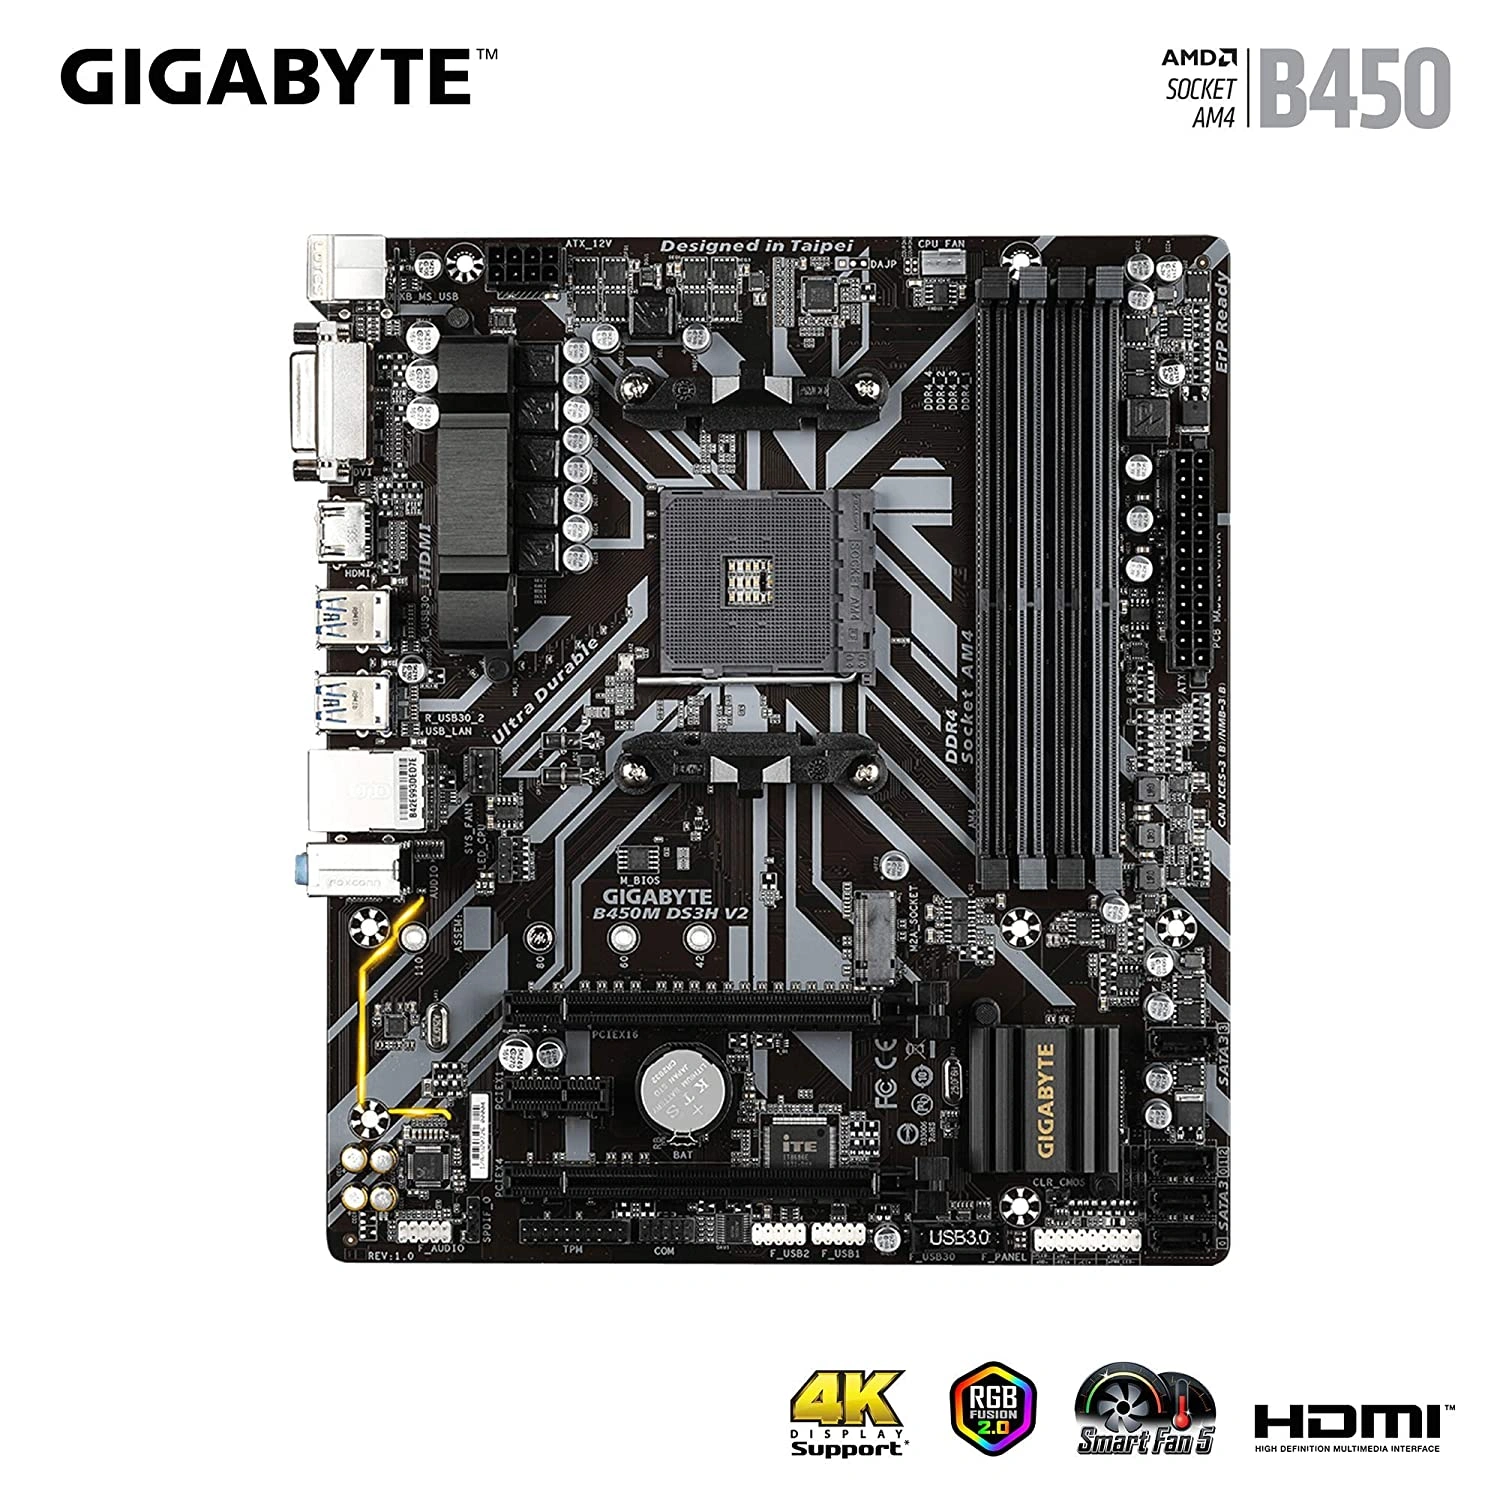 GIGABYTE AMD B450M DS3H V2 Ultra Durable Motherboard with Digital VRM Solution, GIGABYTE Gaming LAN and Bandwidth Management, PCIe Gen3 x4 M.2, Anti-Sulfur Resistor, RGB LED Strip Header-1